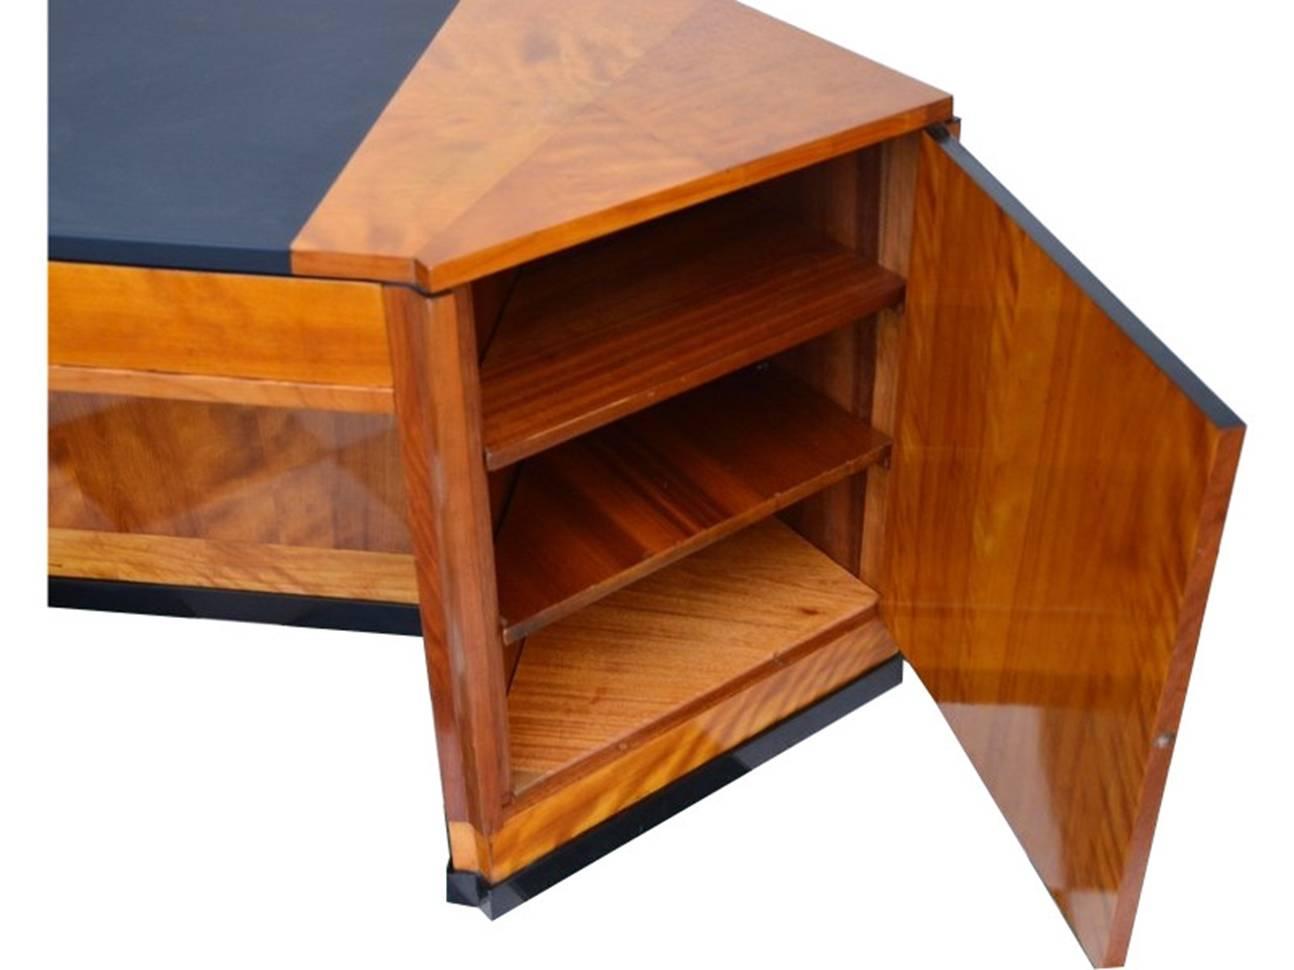 Mid-20th Century Hexagonal Art Deco Desk Made of Cherry and Mahogany Wood